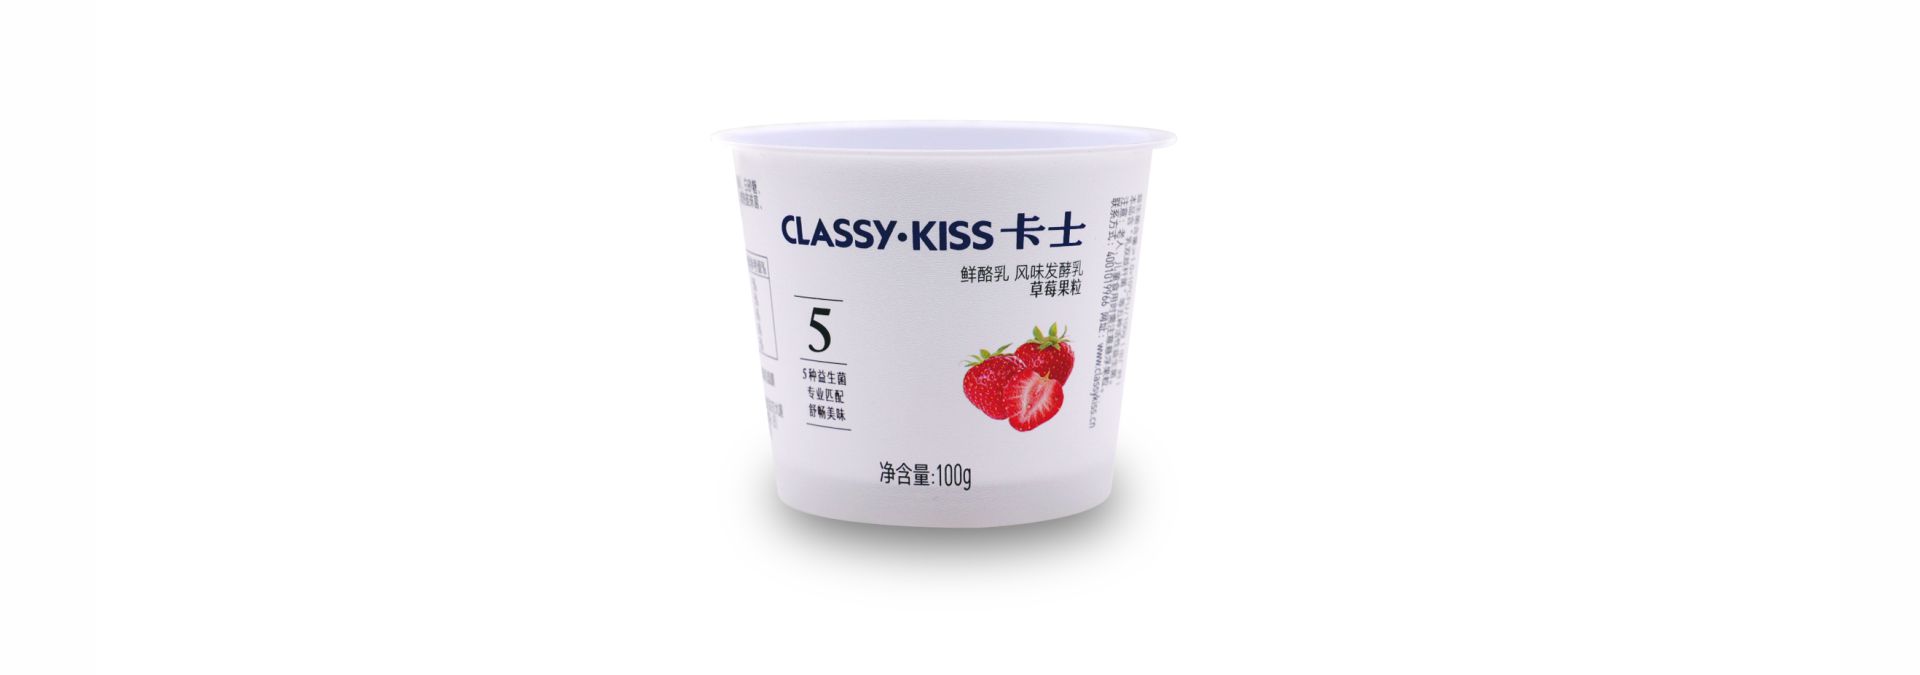 71-100g yogurt cup (71caliber)